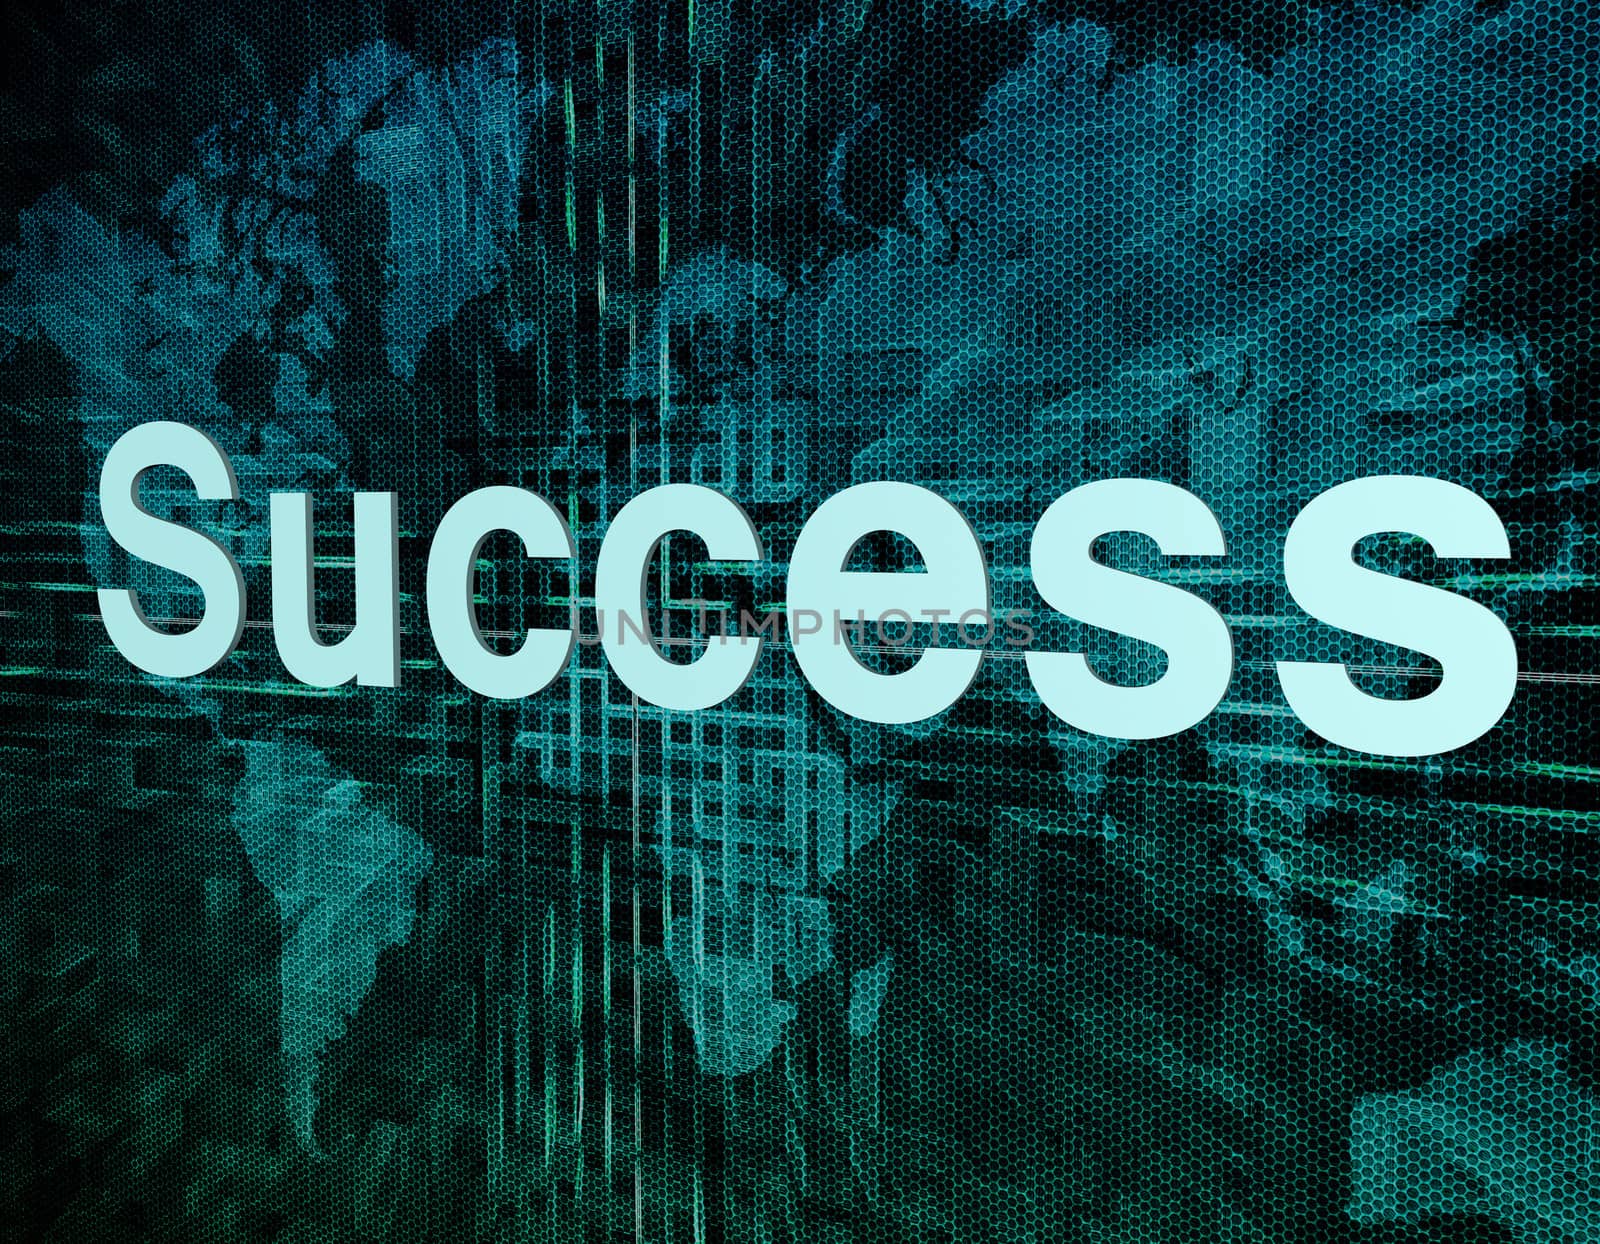 Words on digital world map concept: Success